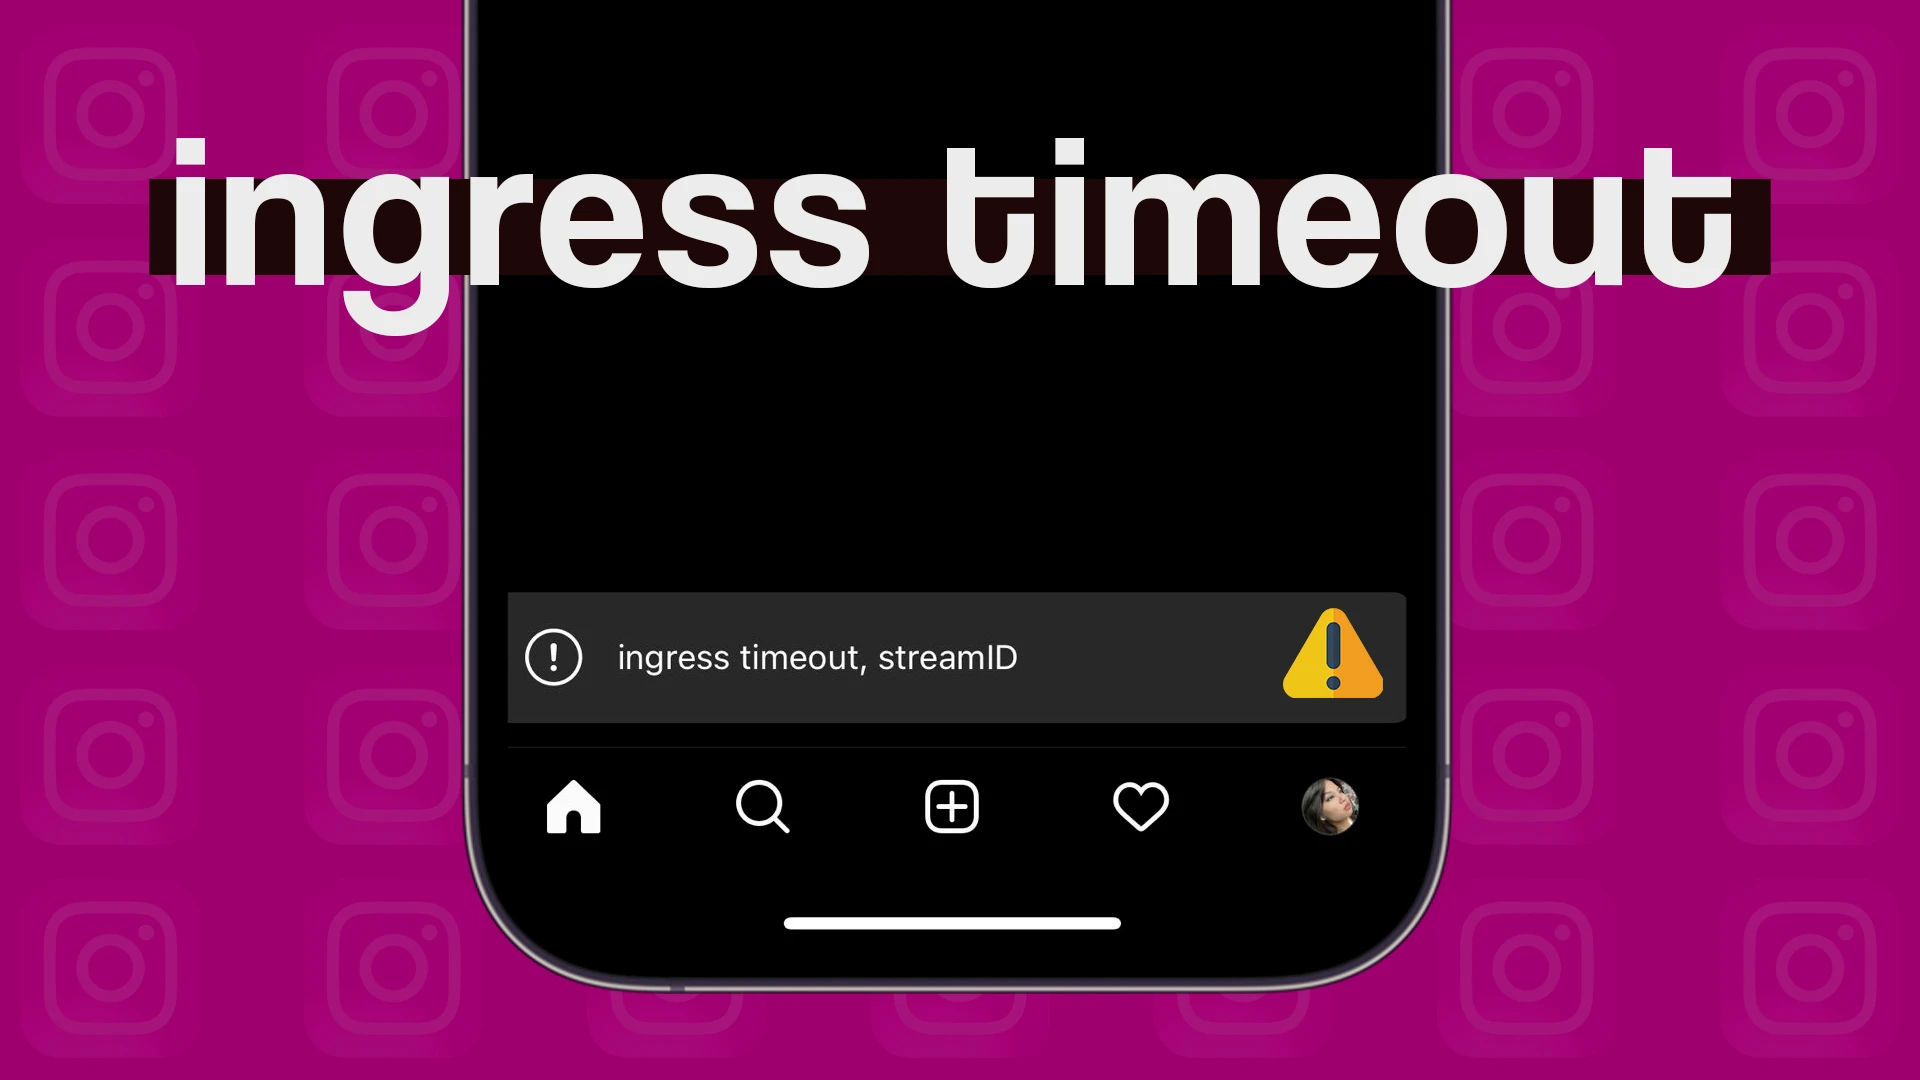 How To Fix Instagram Says Ingress Timeout?